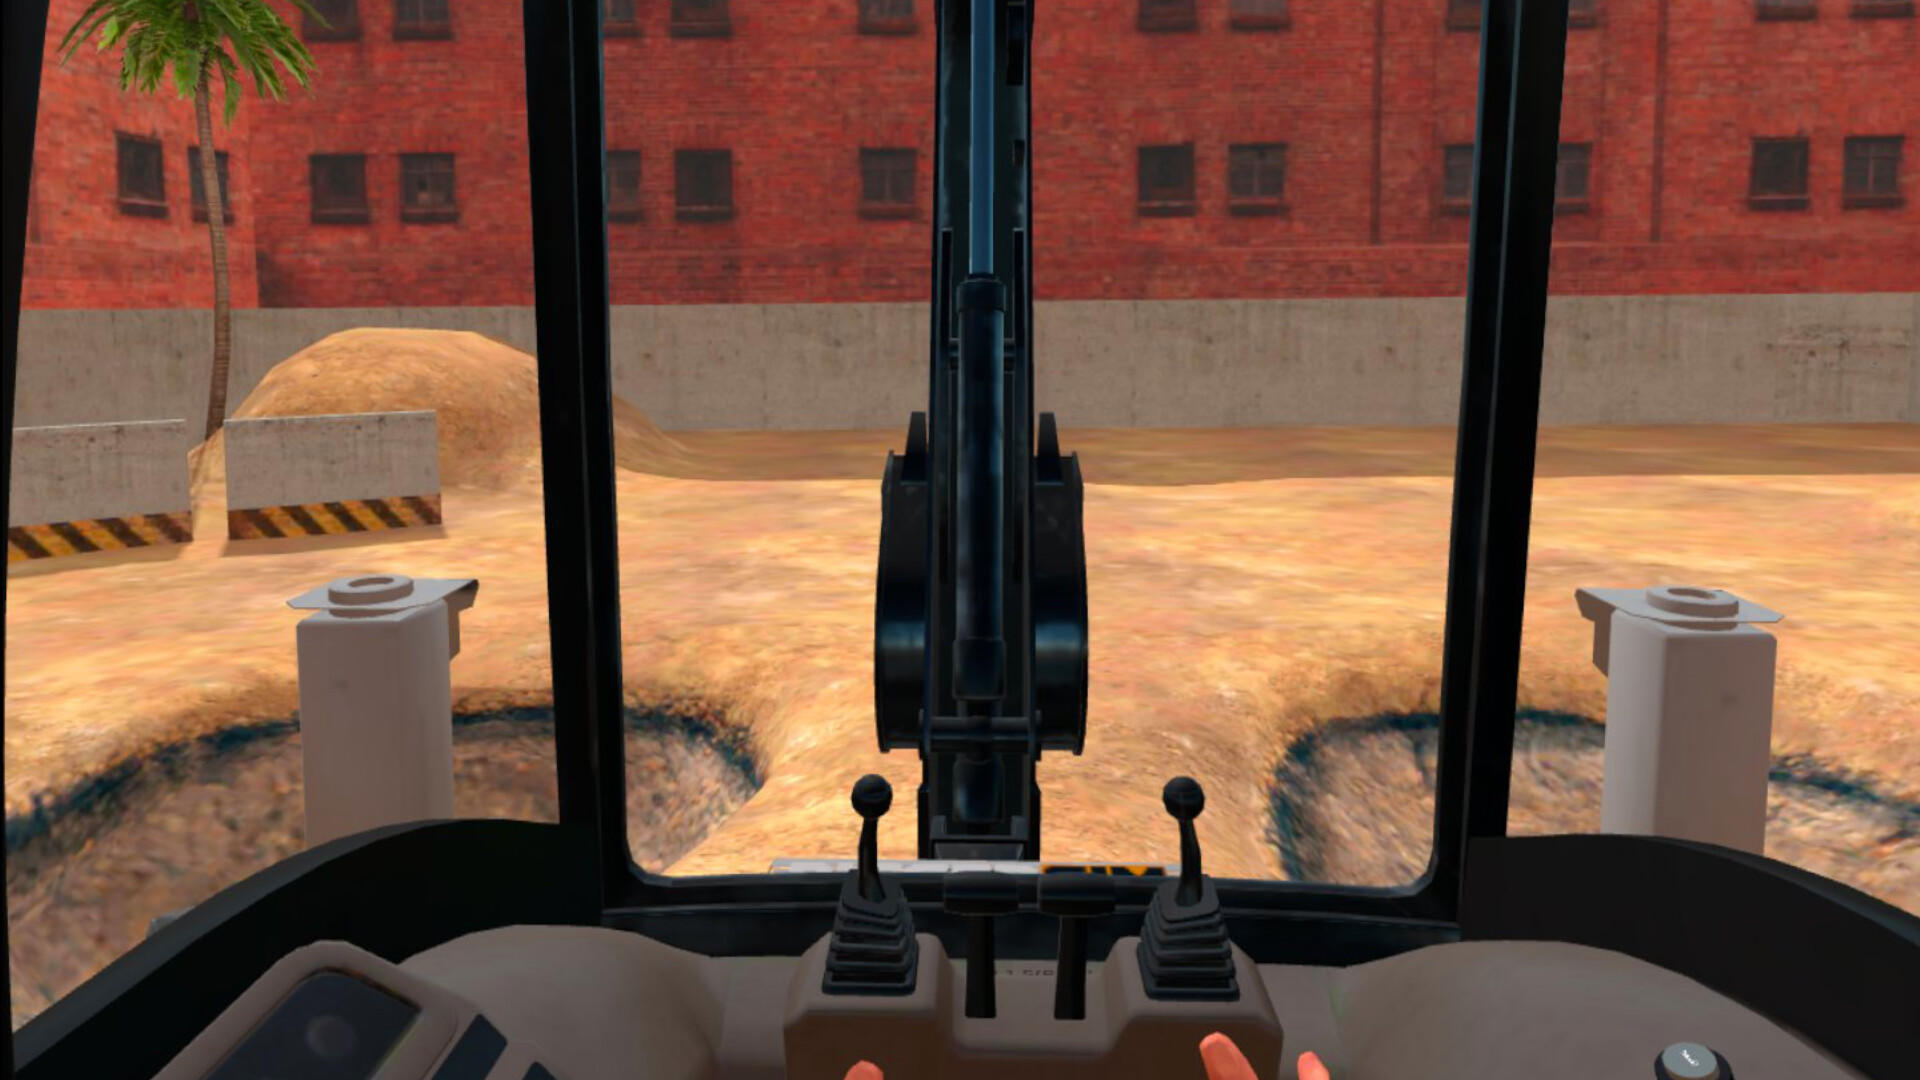 DiggerSim - Excavator & Heavy Equipment Simulator VR screenshot game